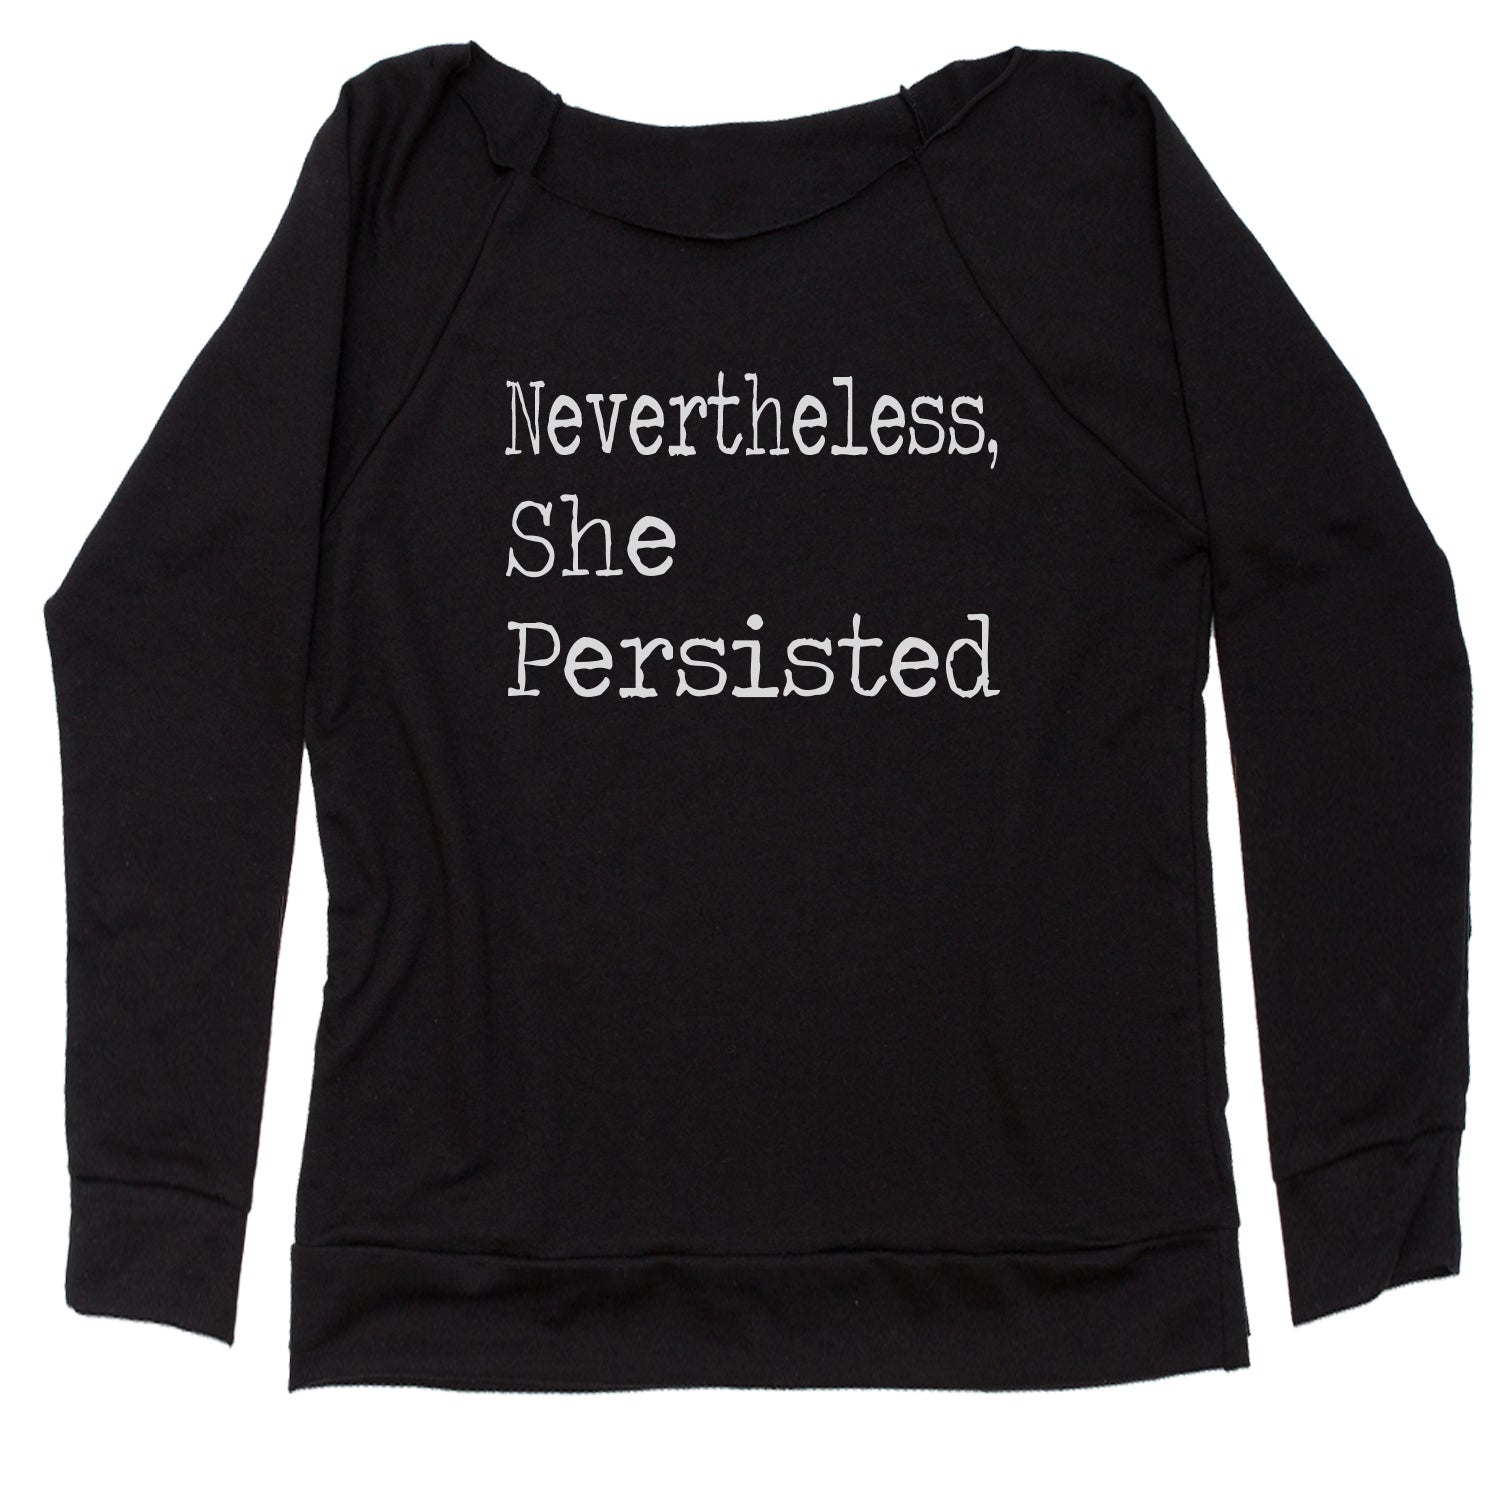 Nevertheless, She Persisted Slouchy Off Shoulder Sweatshirt 2020, feminism, feminist, kamala, letlizspeak, mamala, mcconnell, mitch, momala, mommala by Expression Tees